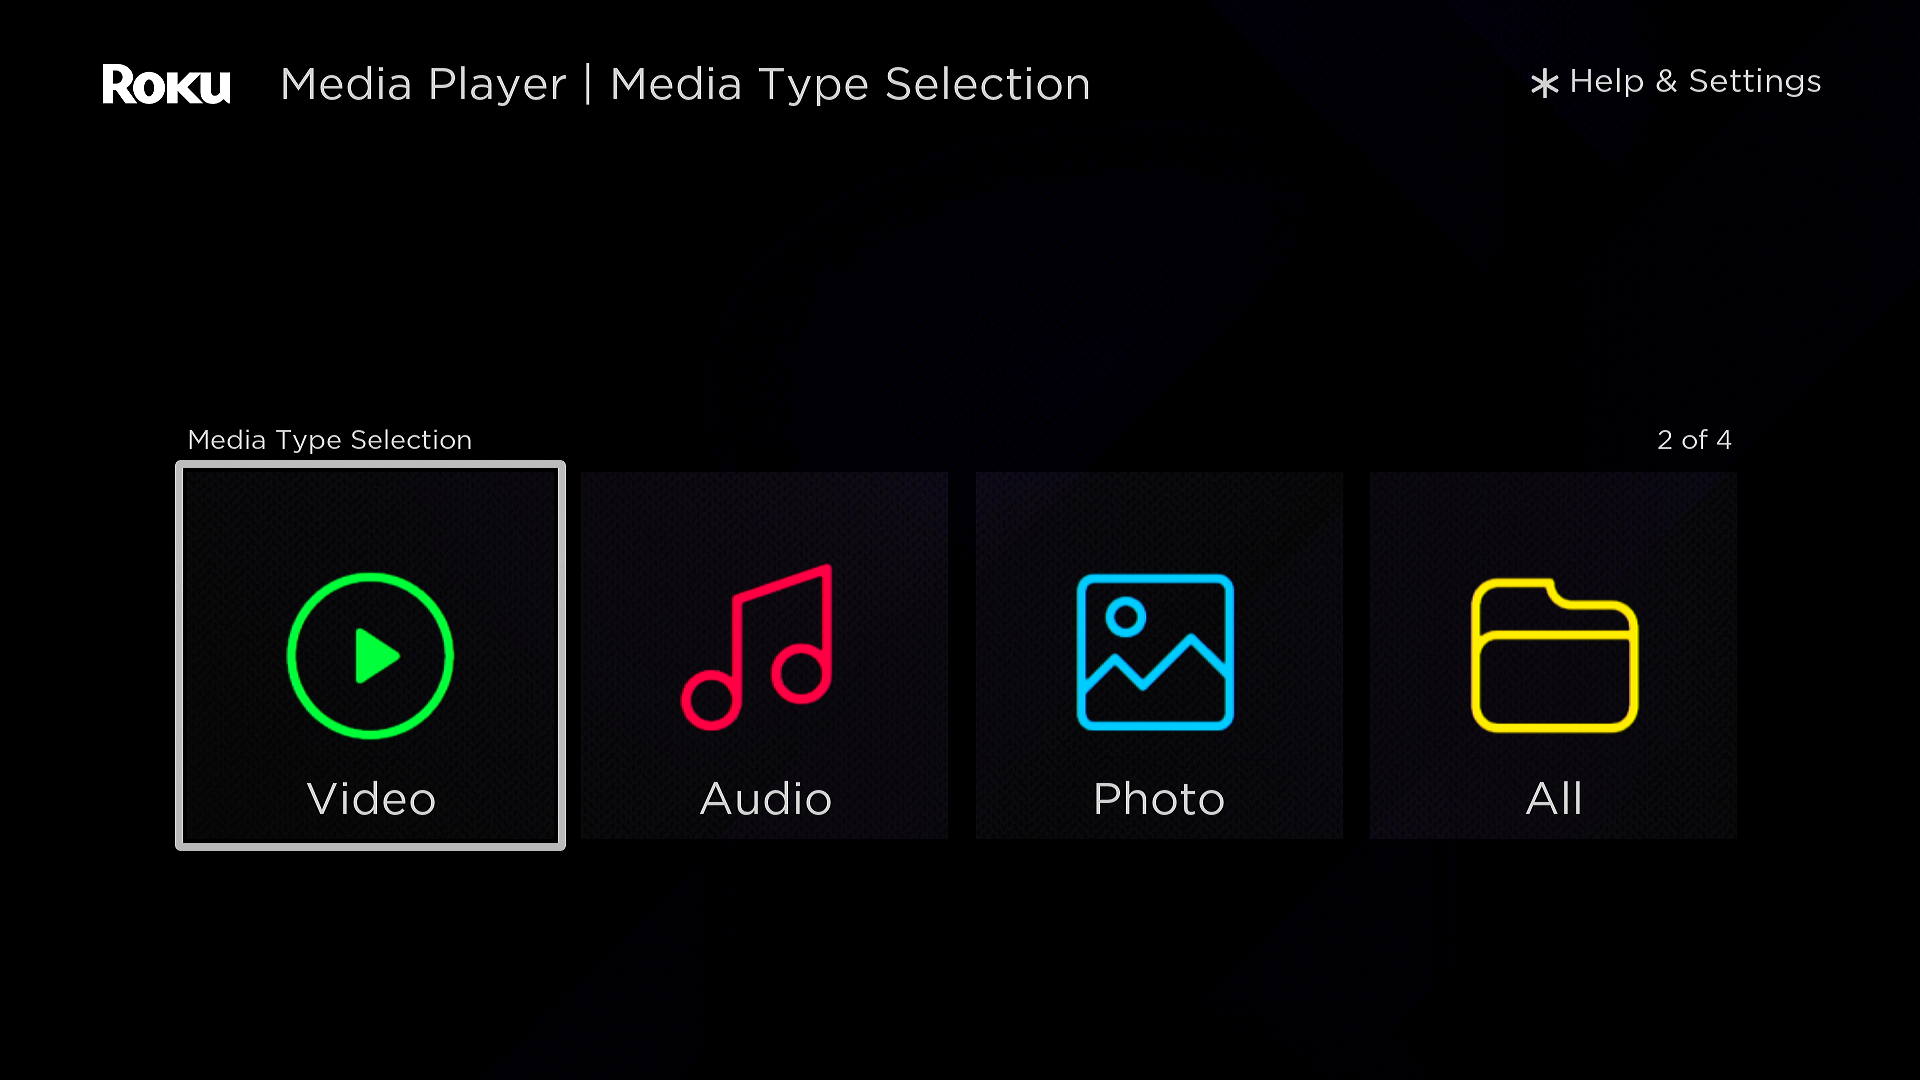 A screenshot of the Roku Media Player